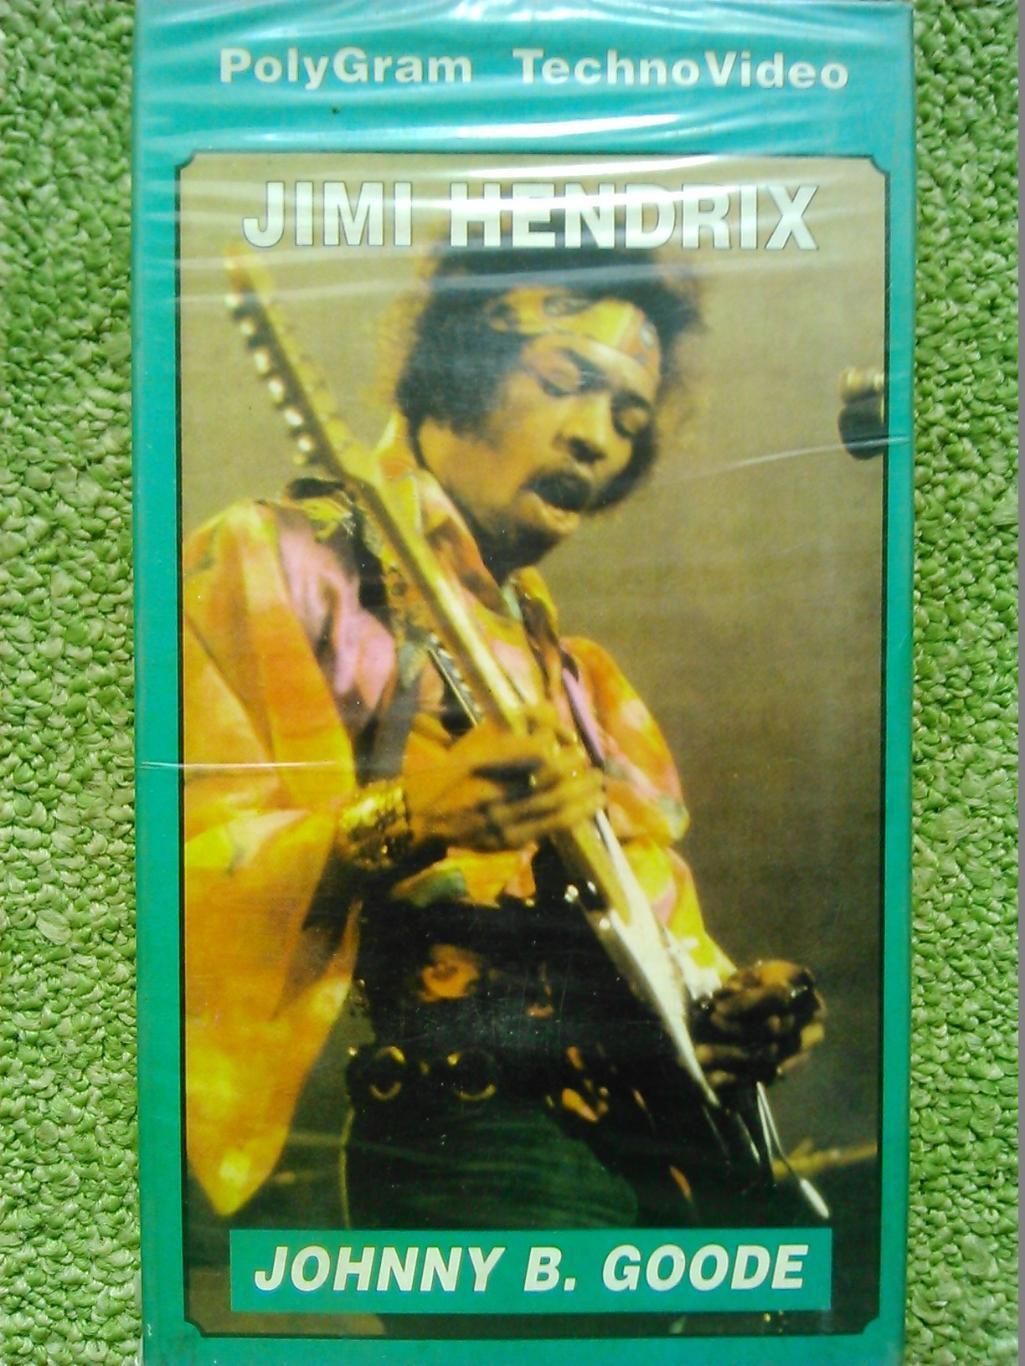 видеокассета. VHS-Jimi HENDRIX -Johnny B.Goode. Оптом скидки до 50%!